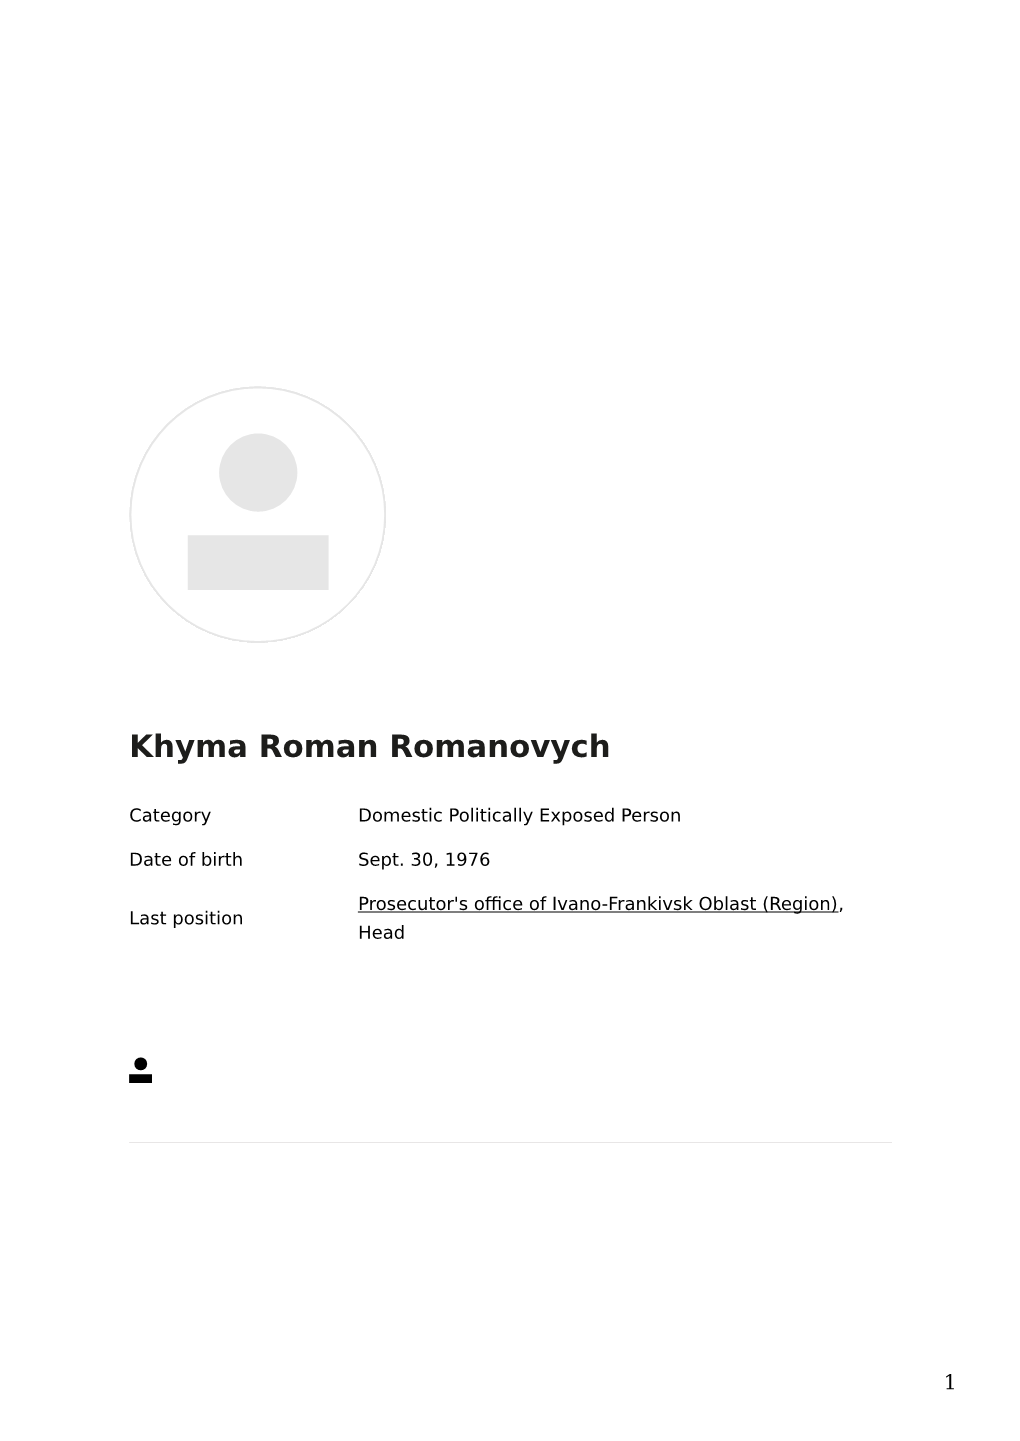 PEP: Dossier Khyma Roman Romanovych, Prosecutor's Office of Ivano-Frankivsk Oblast (Region), Head